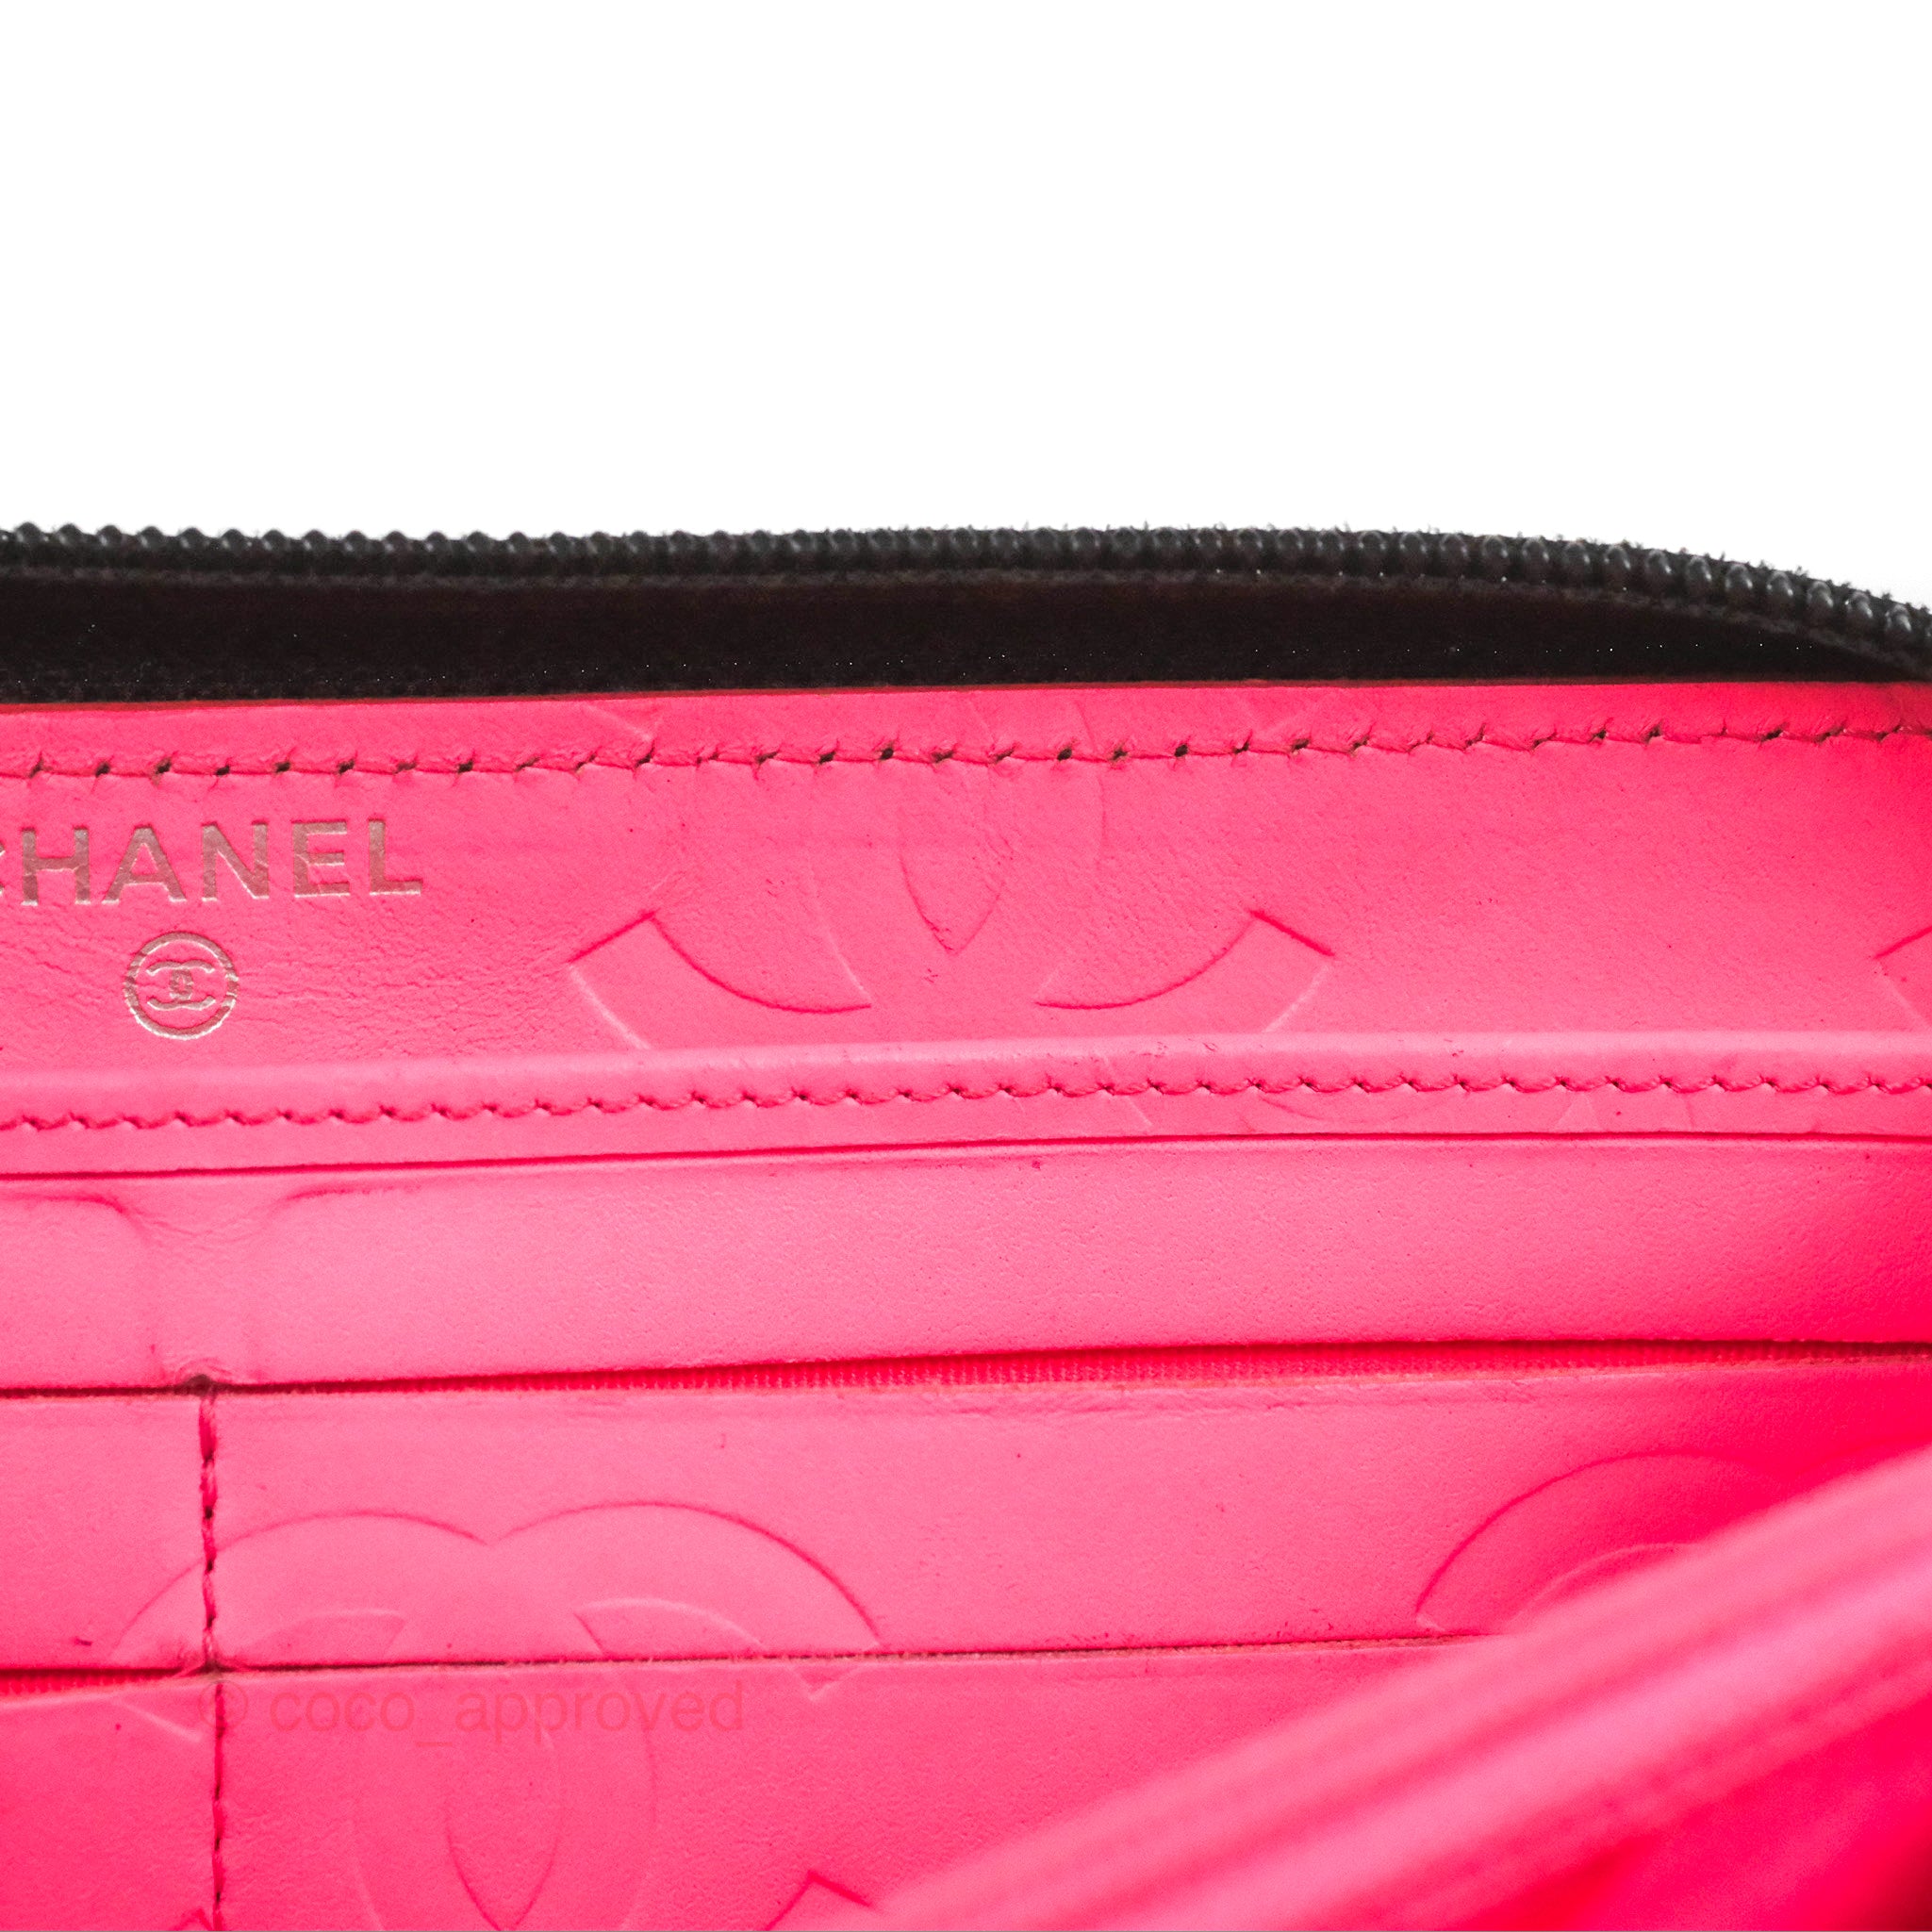 Chanel Beige Quilted Calfskin Leather Cambon Ligne L Yen Wallet